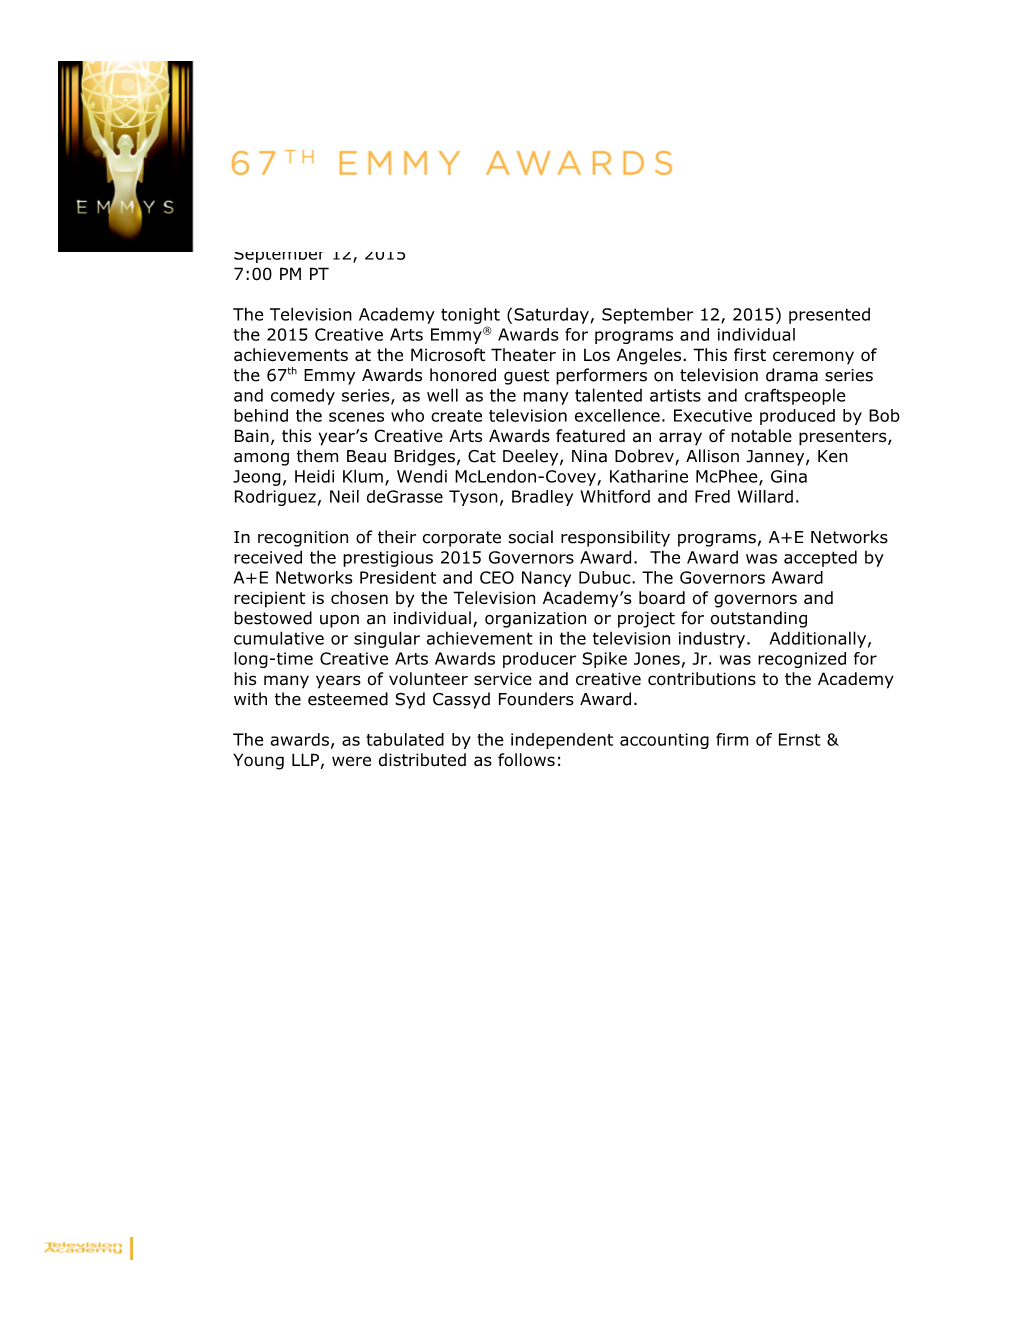 2015 Creative Arts Emmy AWARDS